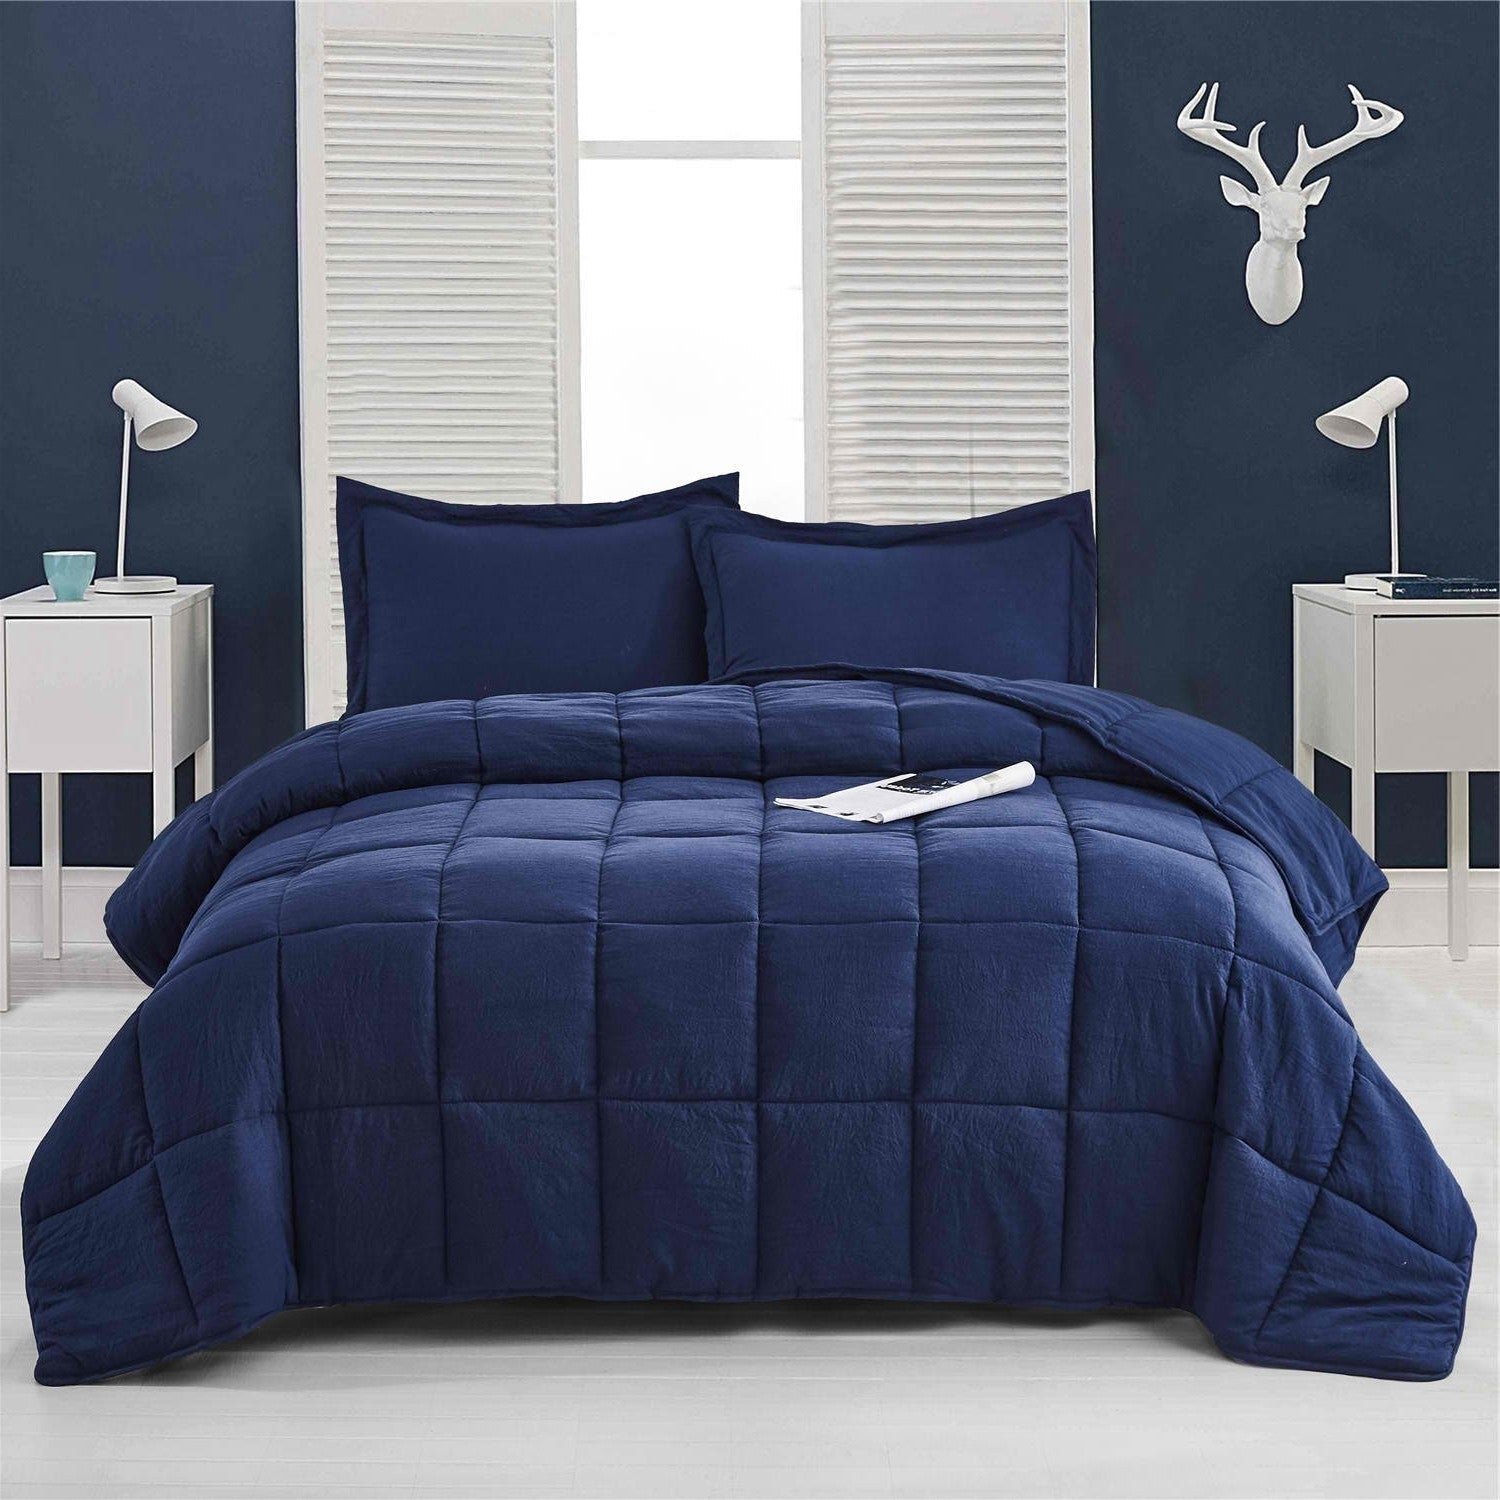 Bedroom > Comforters And Sets - King Size Navy 3 Piece Microfiber Reversible Comforter Set